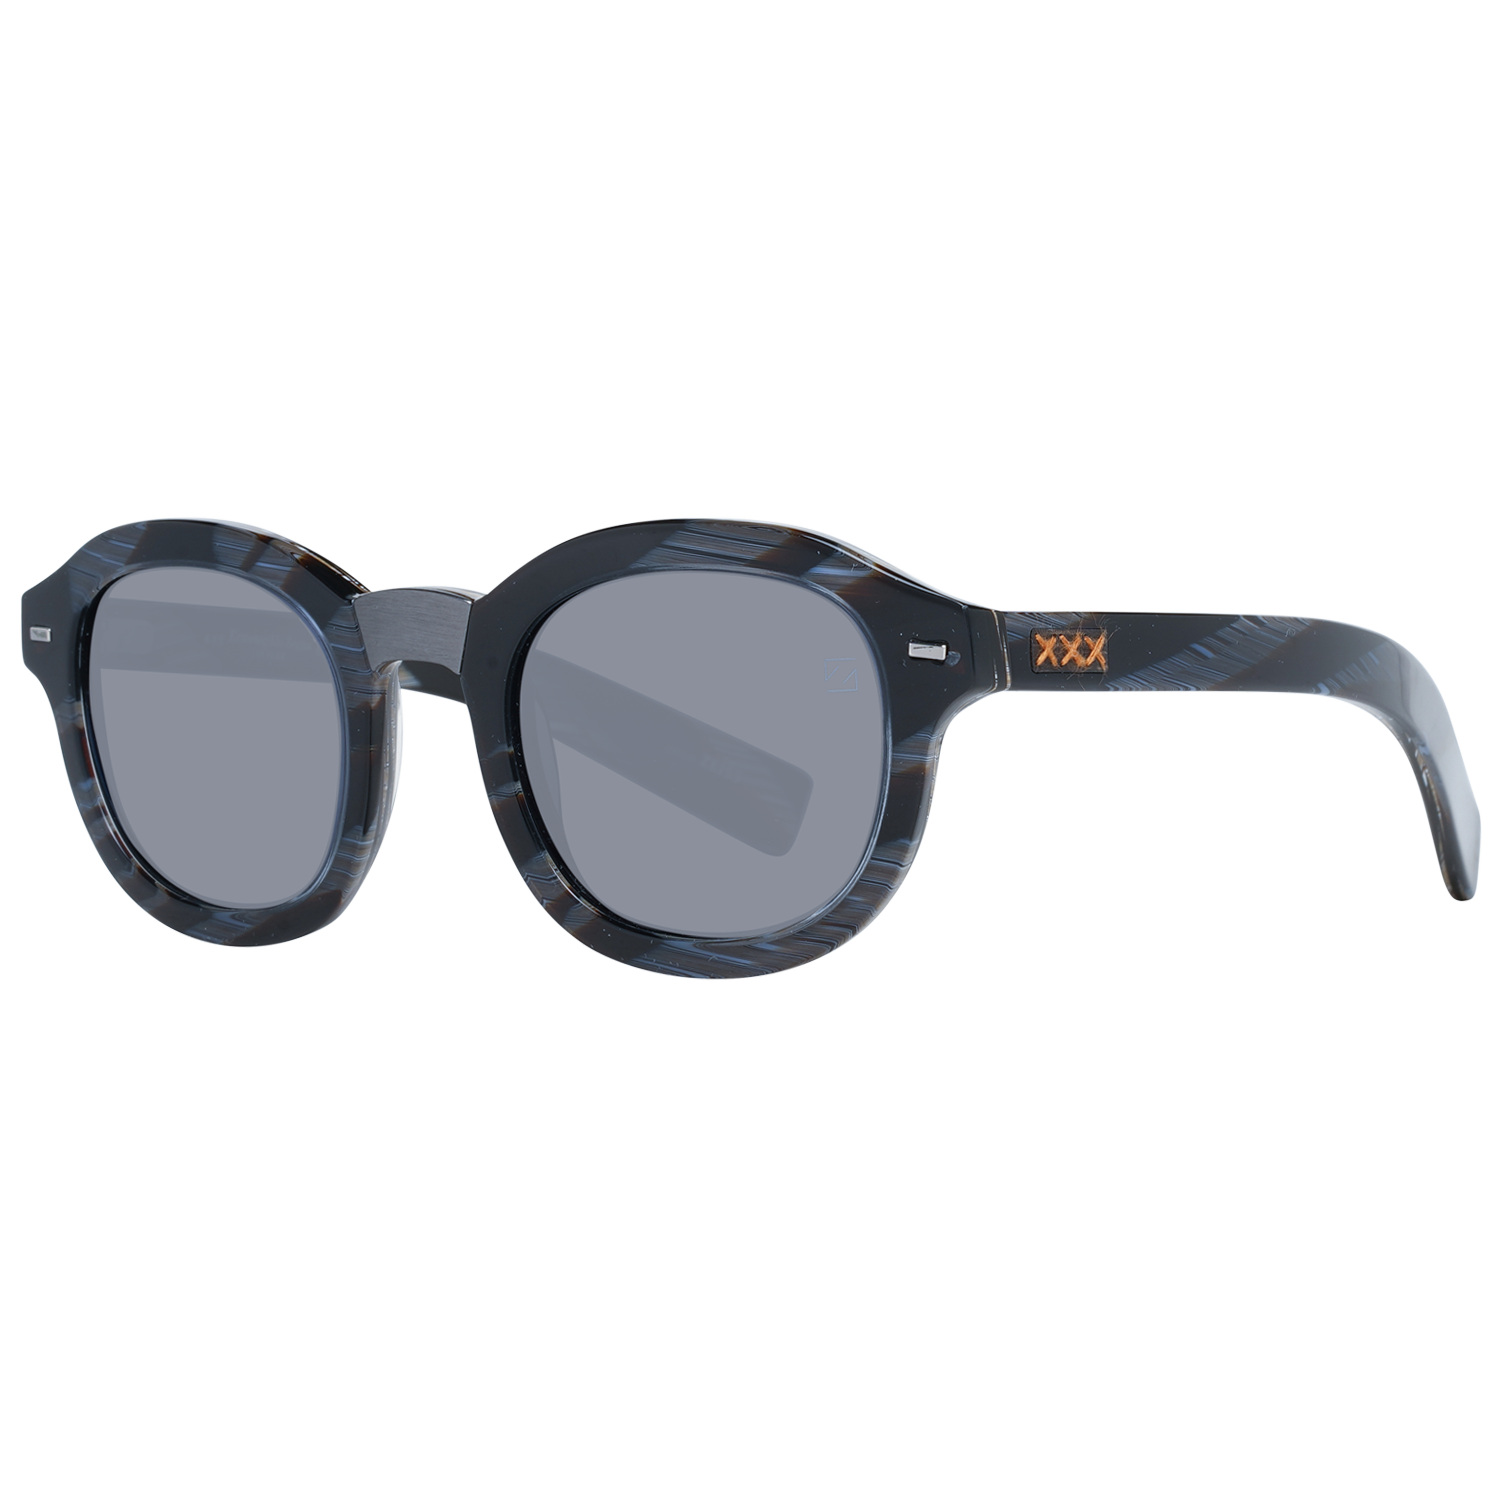 Zegna Couture Sunglasses Zegna Couture Sunglasses ZC0011 47 92A Eyeglasses Eyewear UK USA Australia 